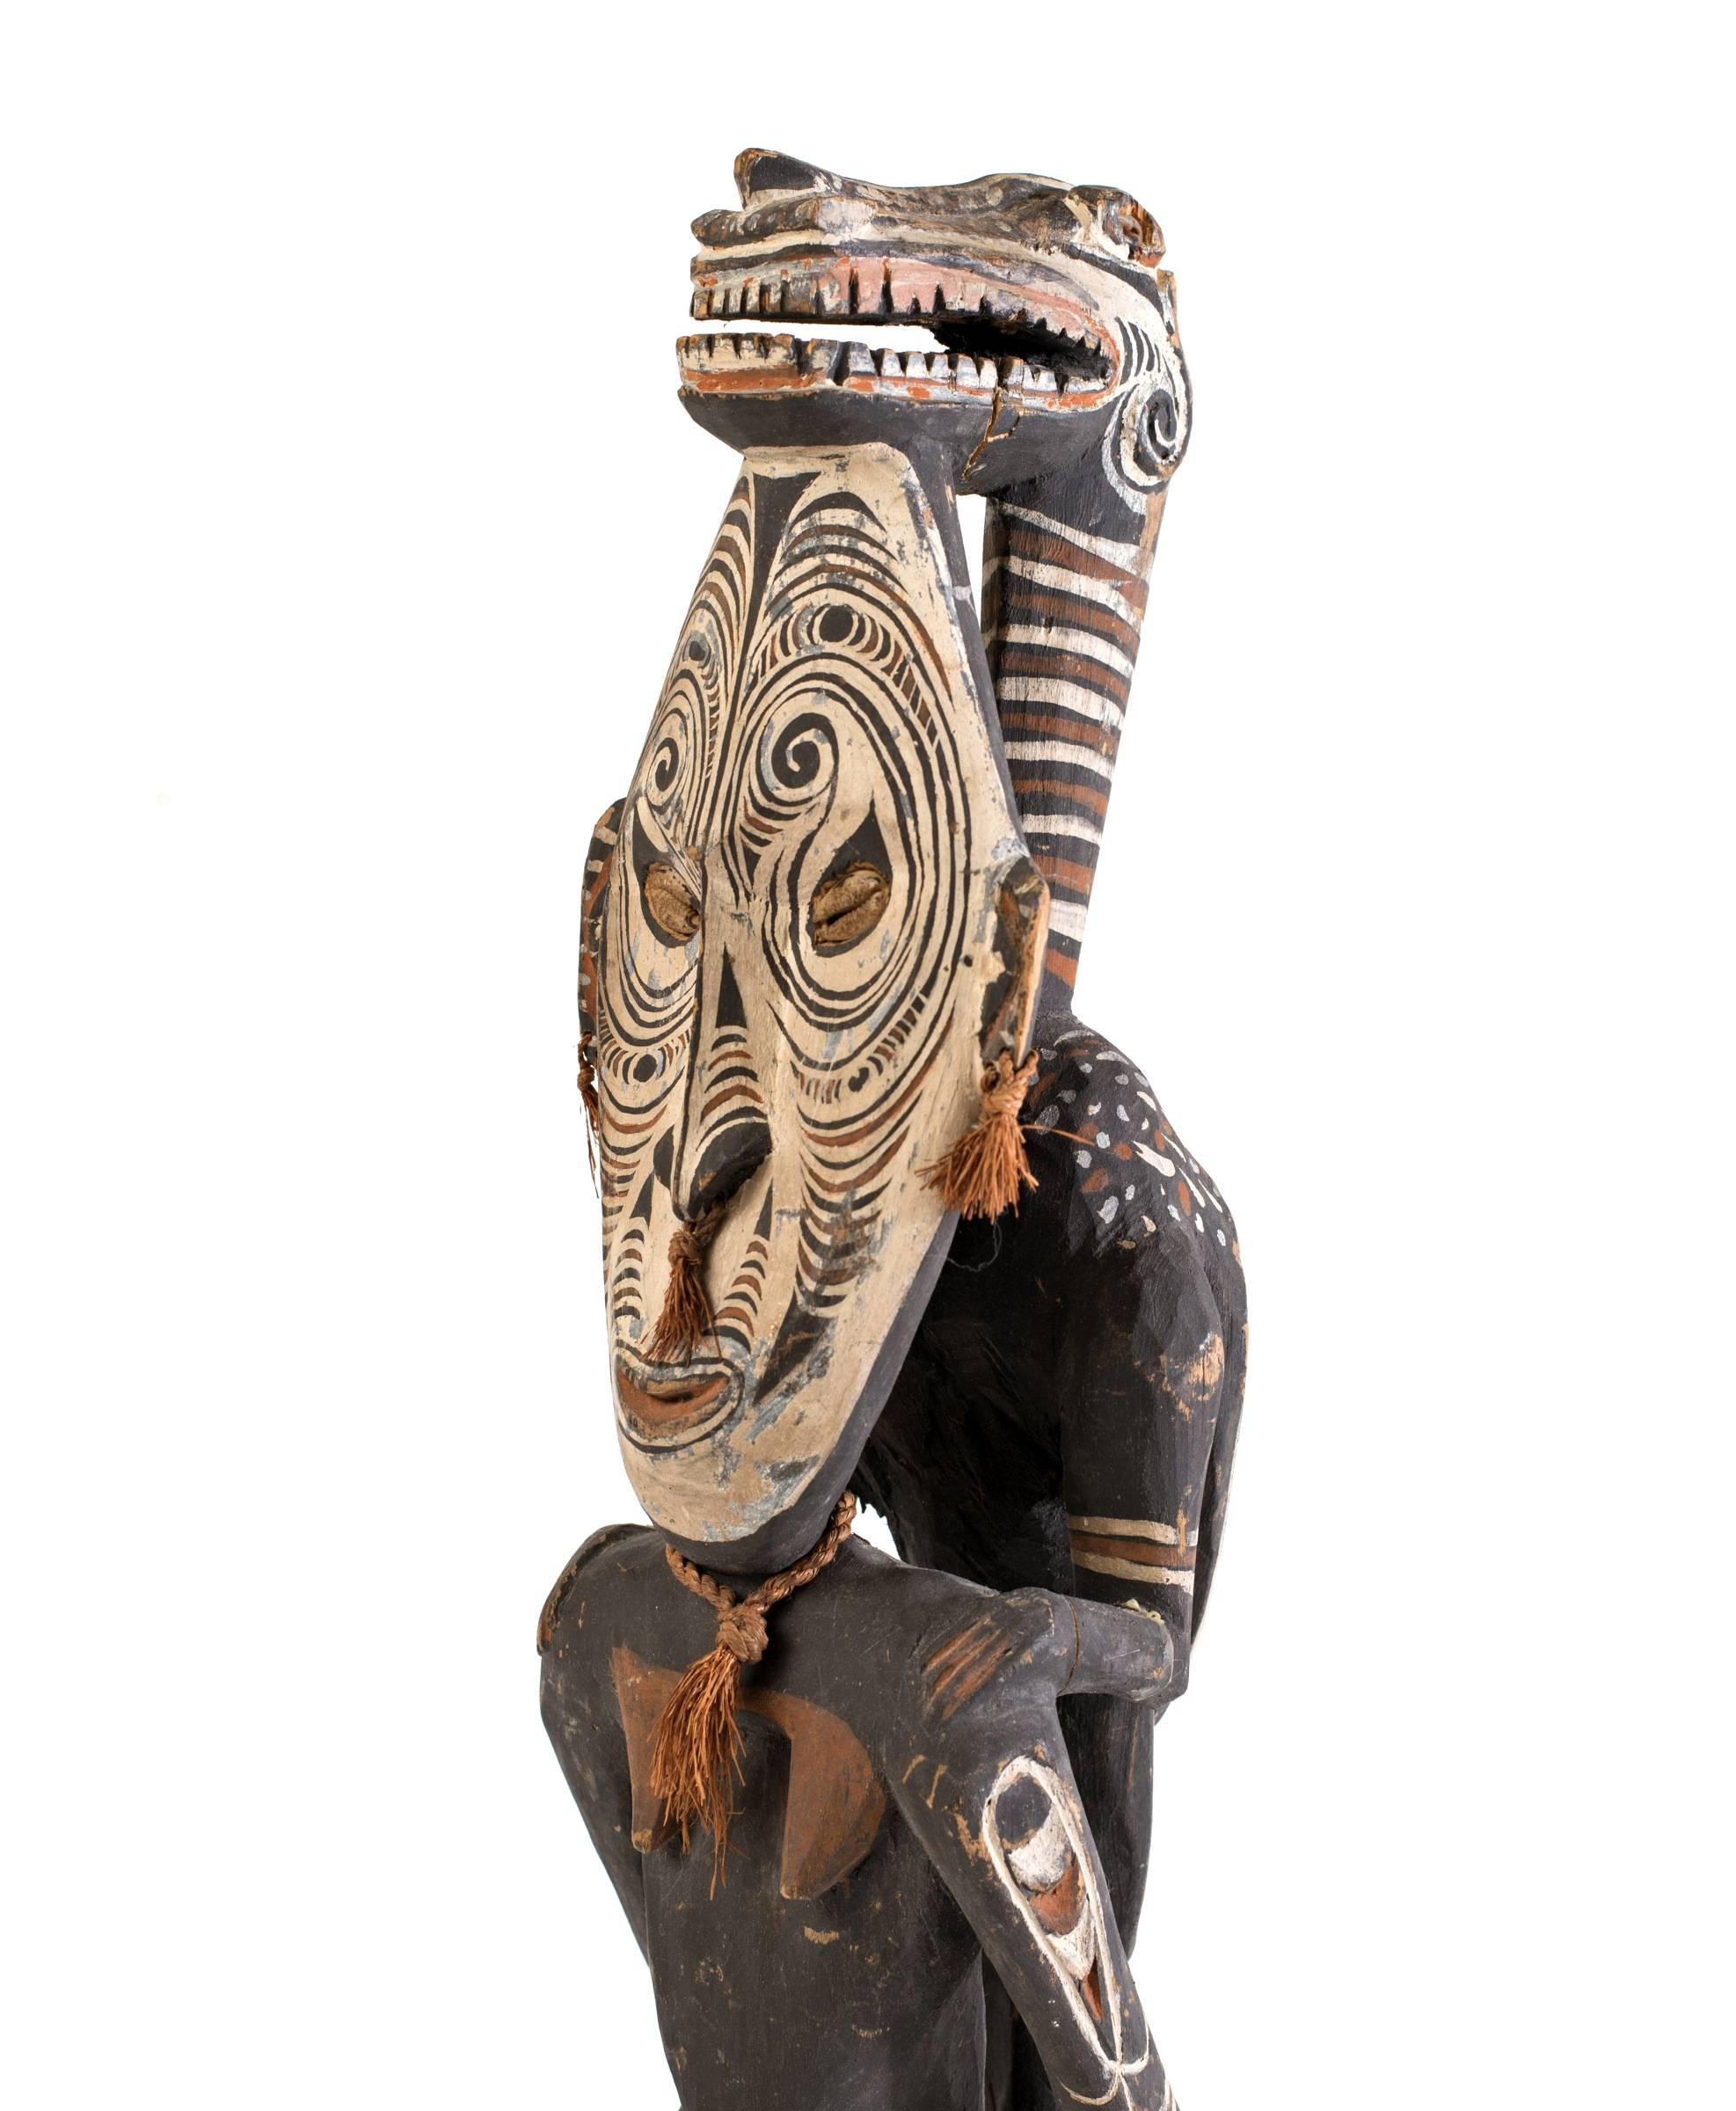 Mid-20th Century Oceanic Sepik River Gable Figure Sculpture from Papua, New Guinea